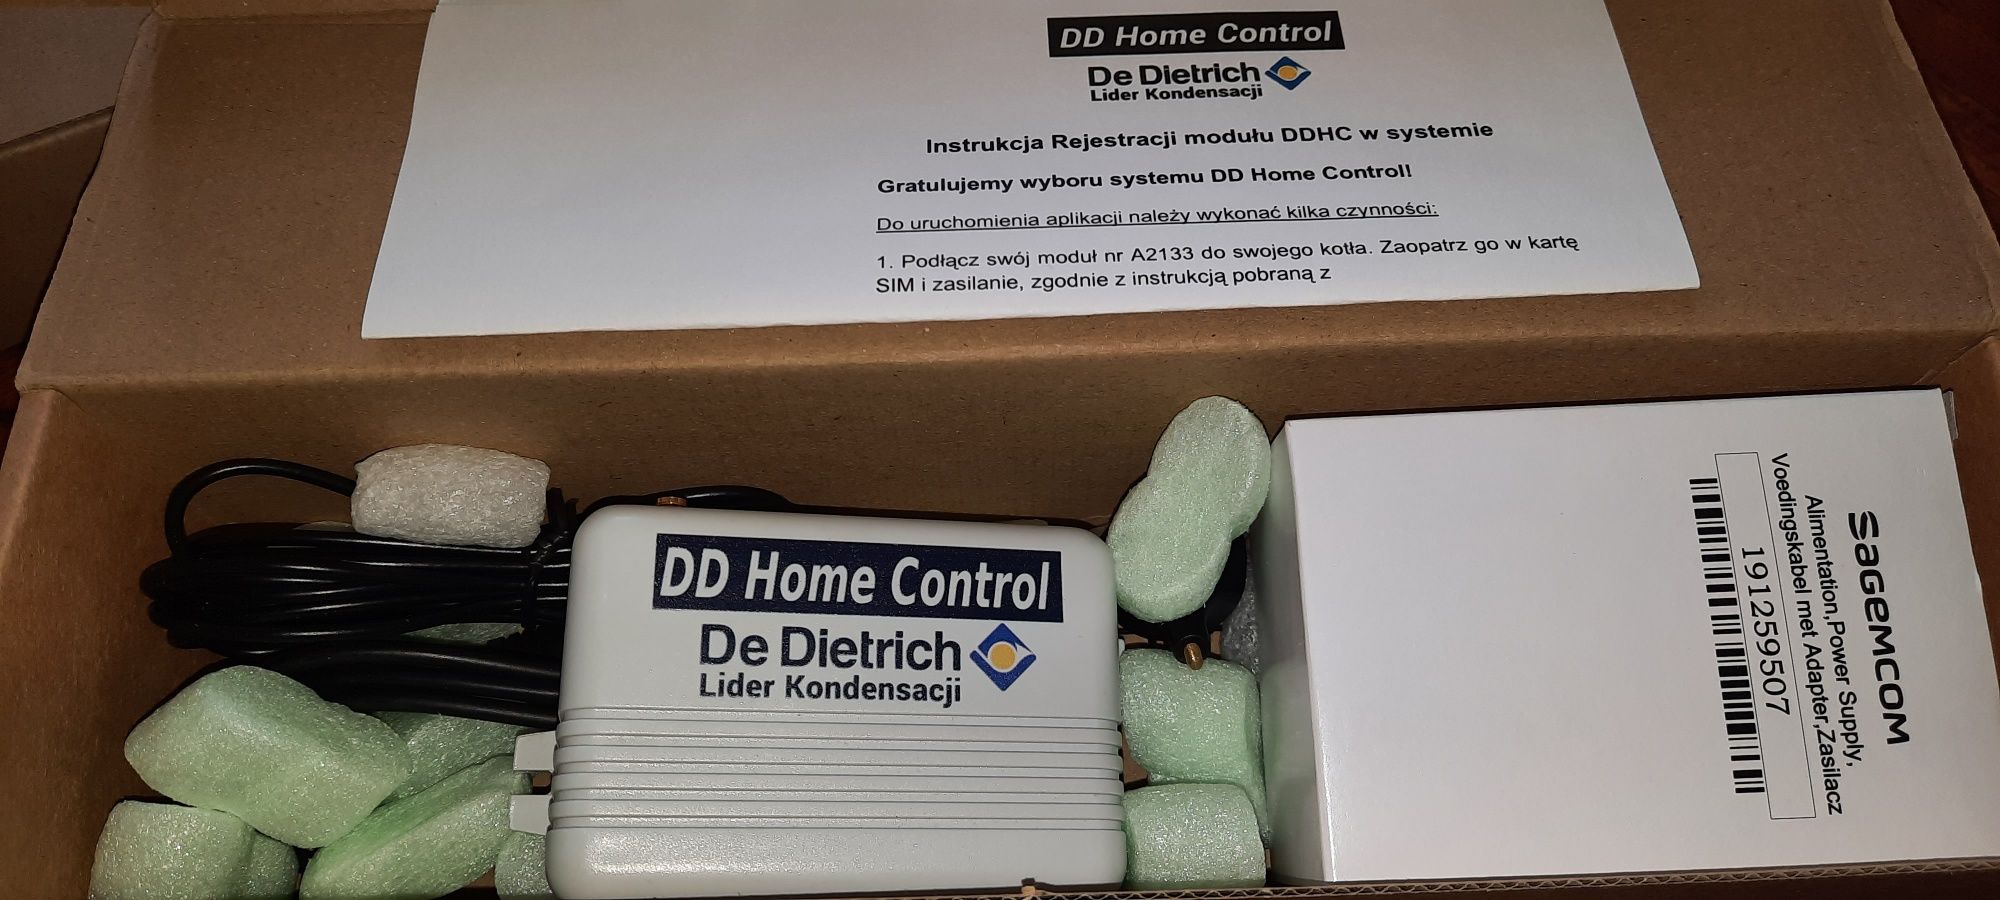 DD Home Control moduł WiFi DeDietrich